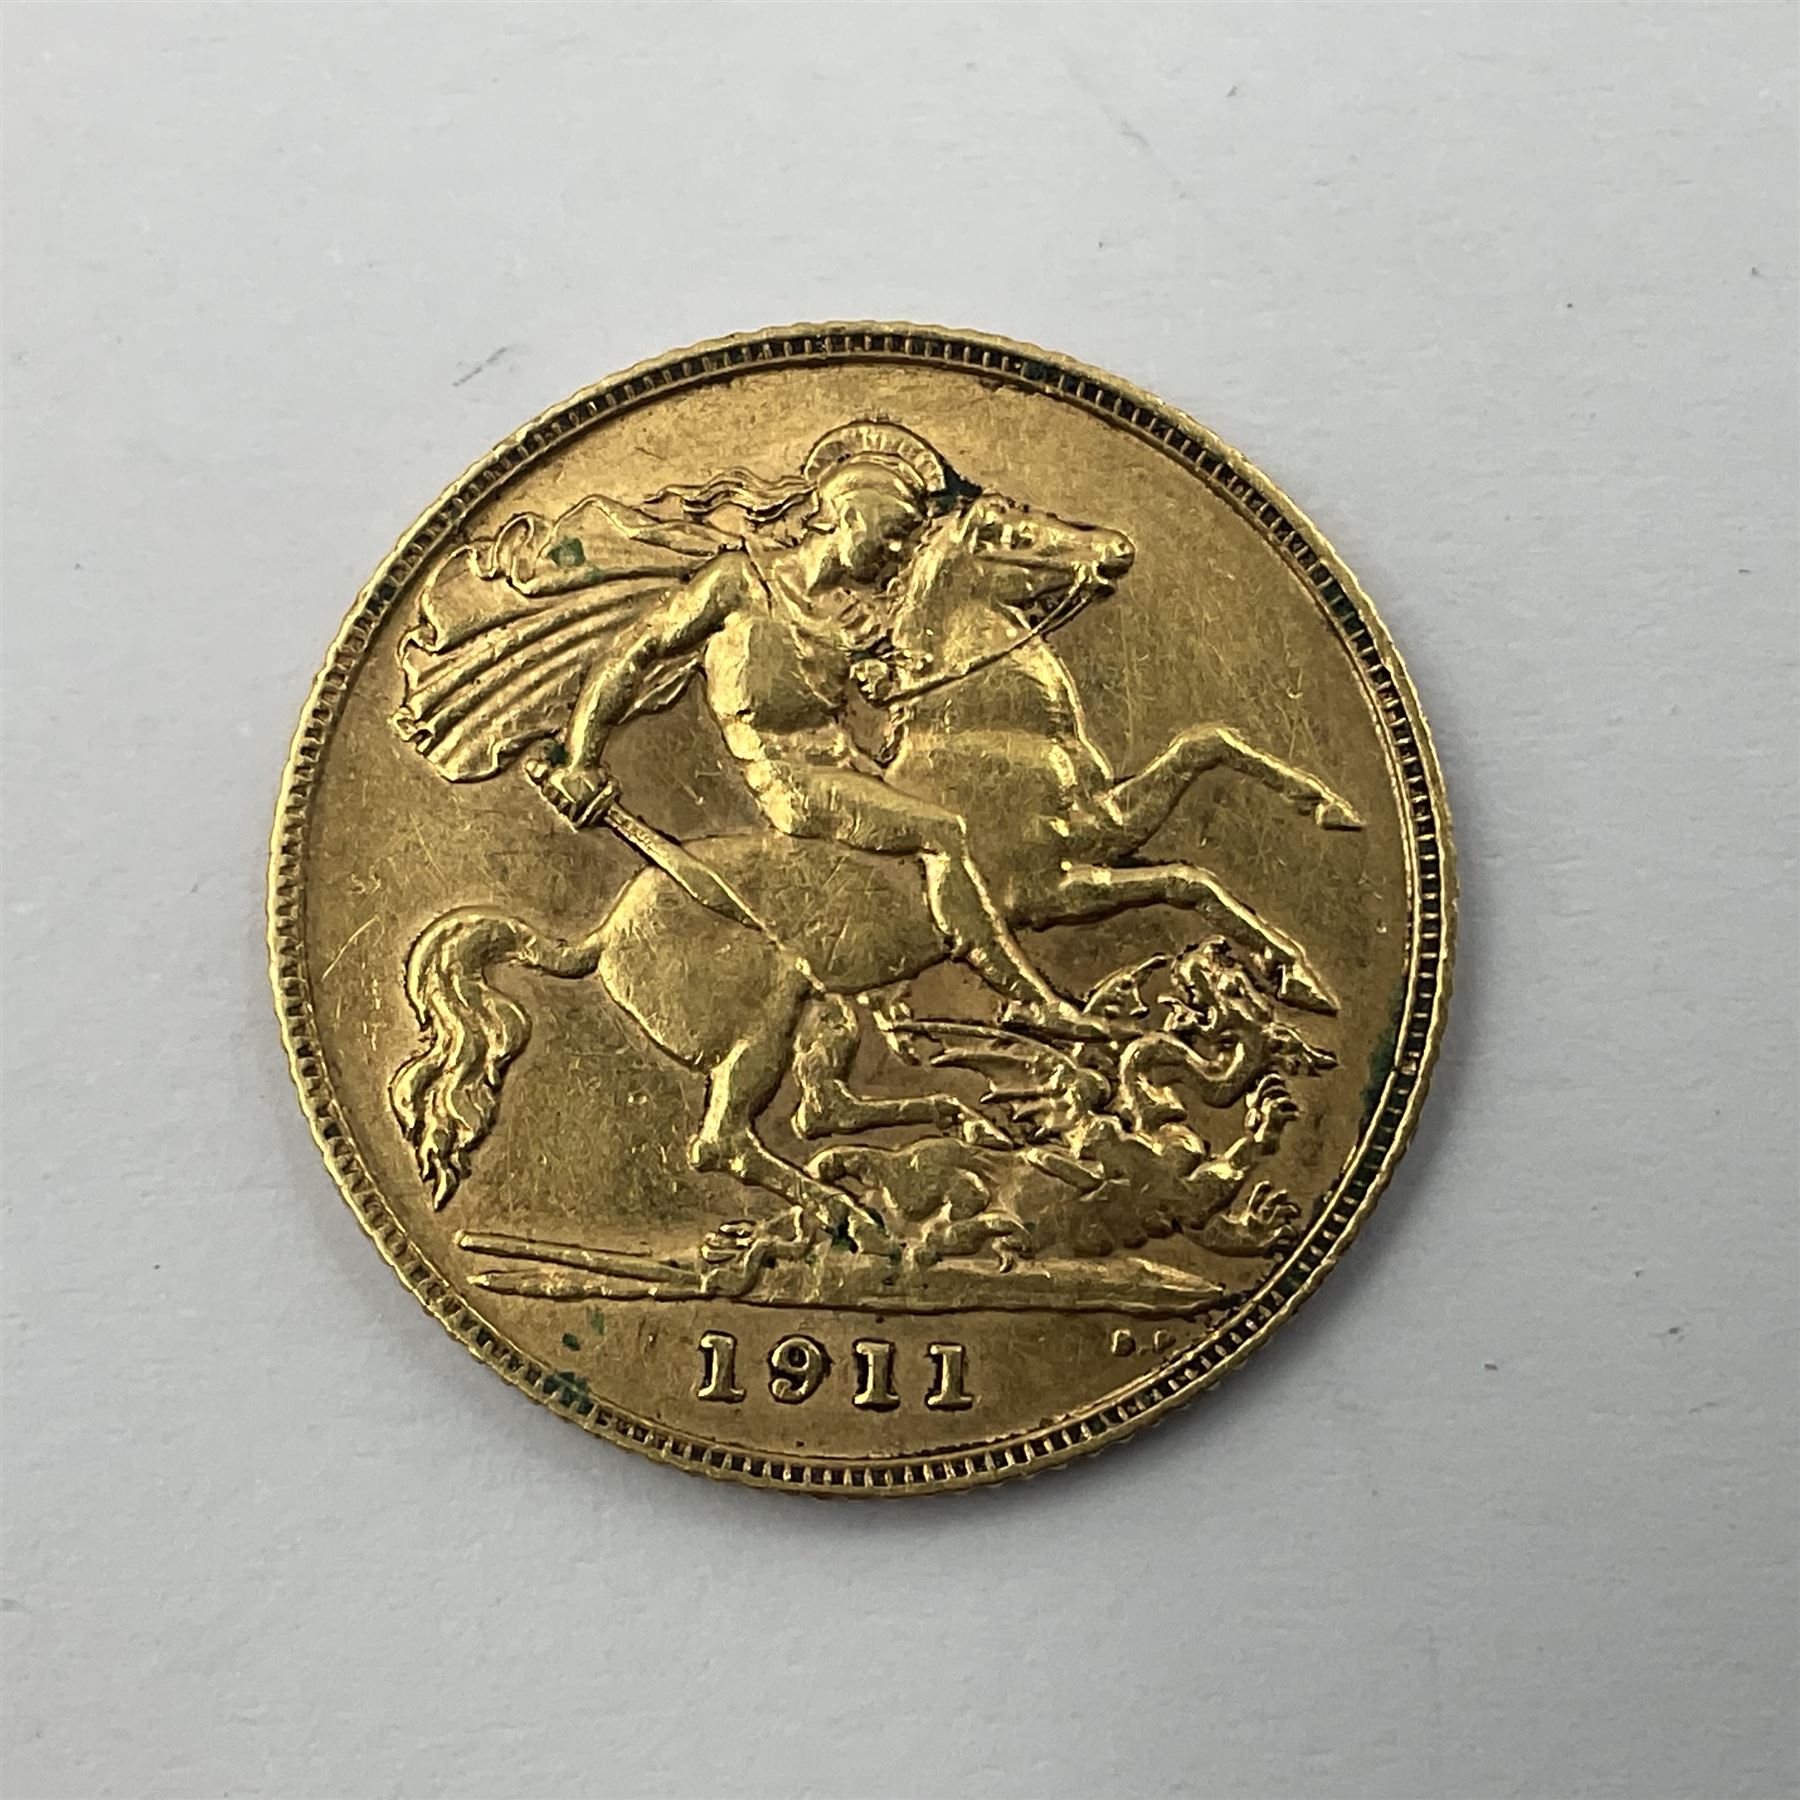 King George V 1911 gold half sovereign coin - Image 2 of 3